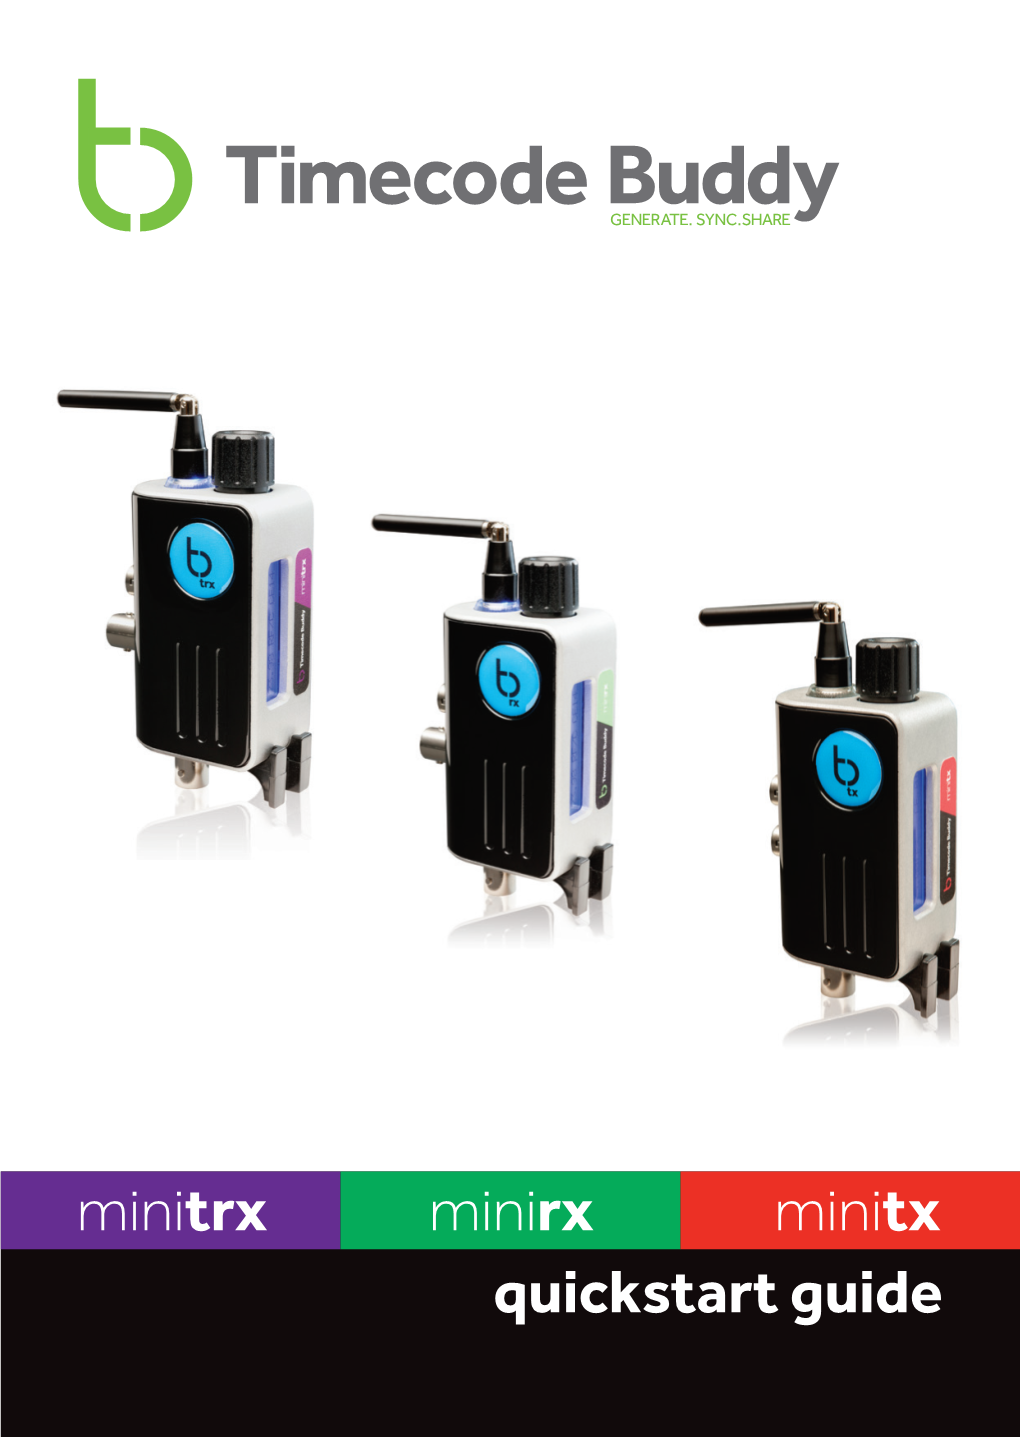 Minitrx Minirx Minitx Quickstart Guide Welcome to Timecode Buddy